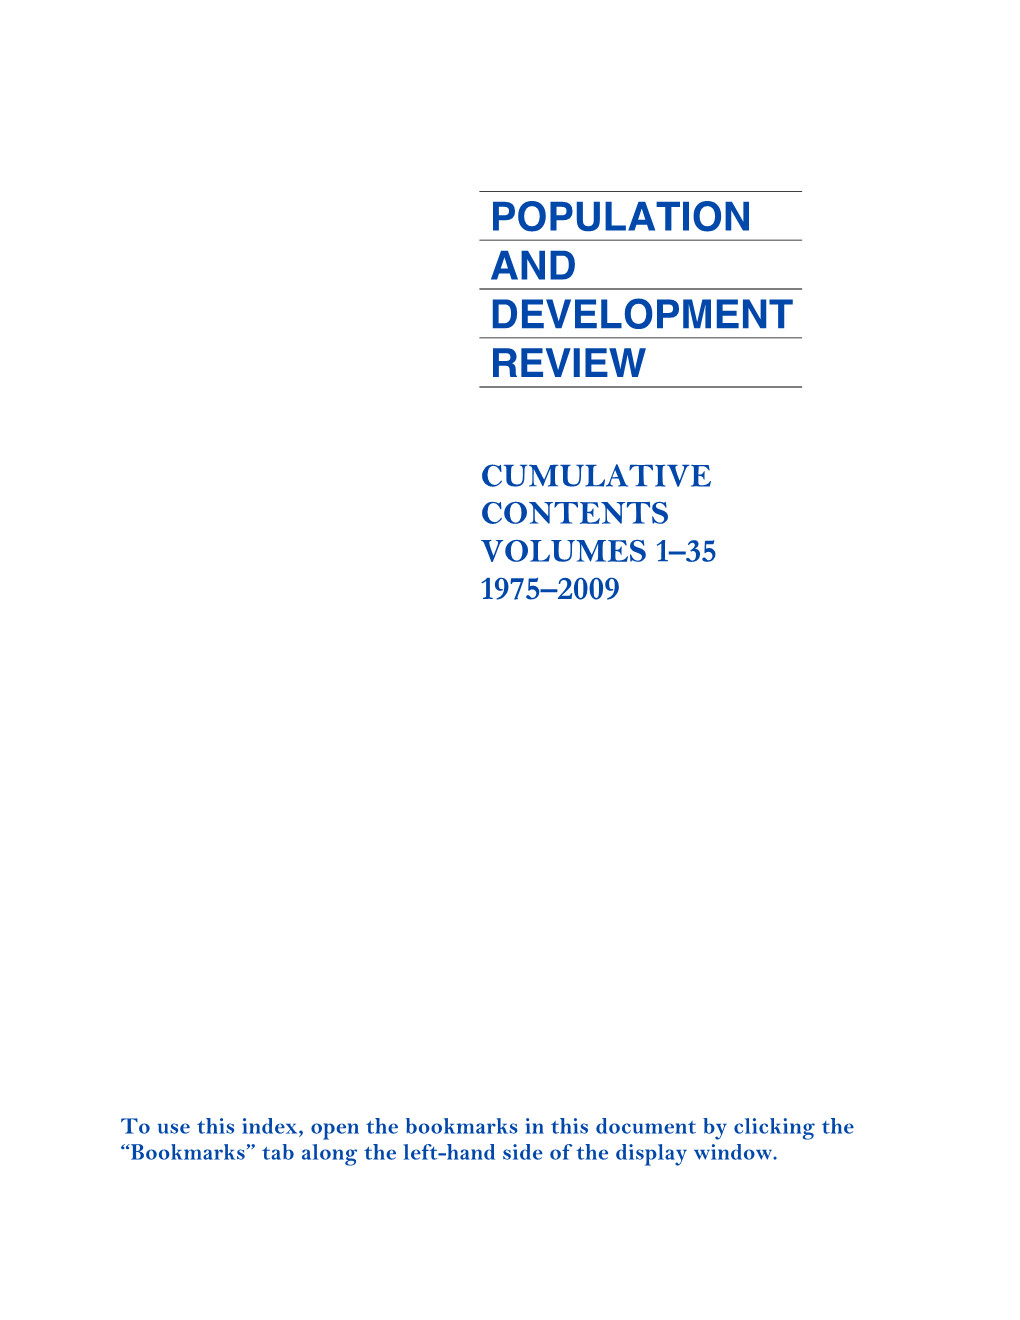 Population and Development Review Cumulative Index